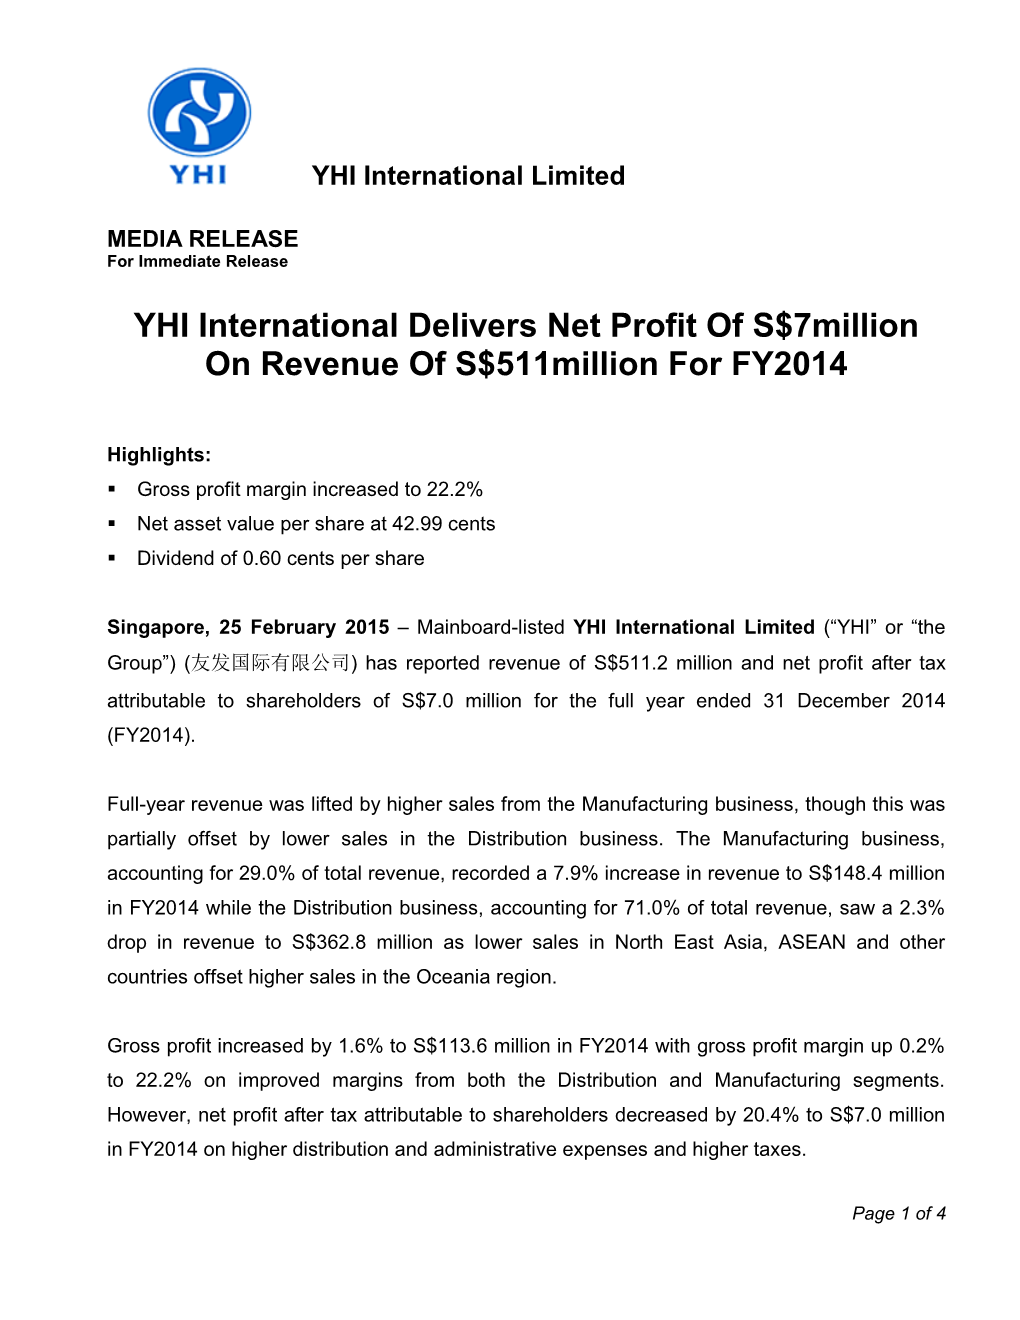 YHI International Delivers Net Profit of S$7Million on Revenue of S$511Million for FY2014